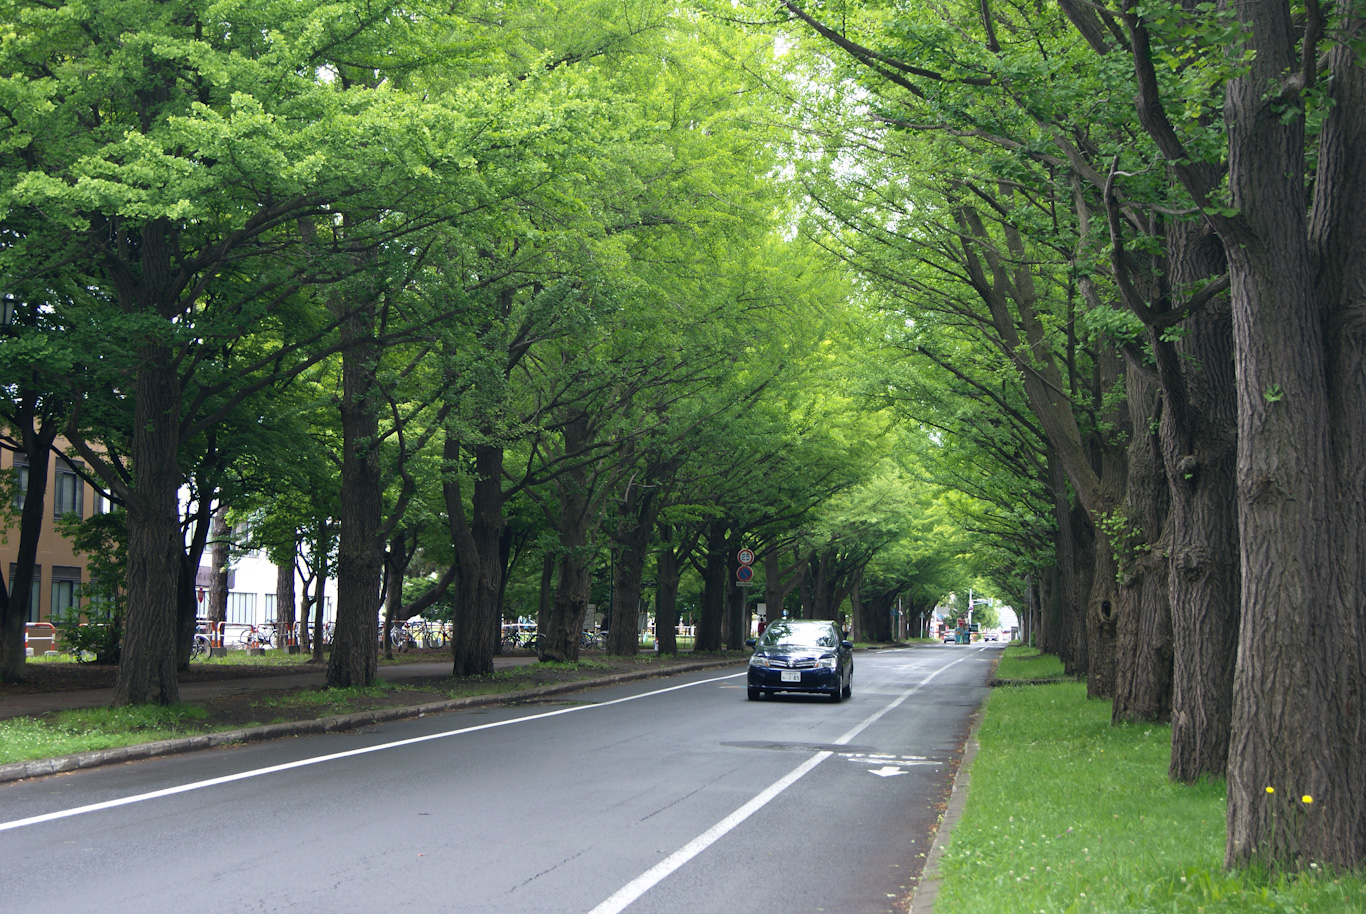 Rows of trees at Ginkgo avenue at Hokkaido university Japan